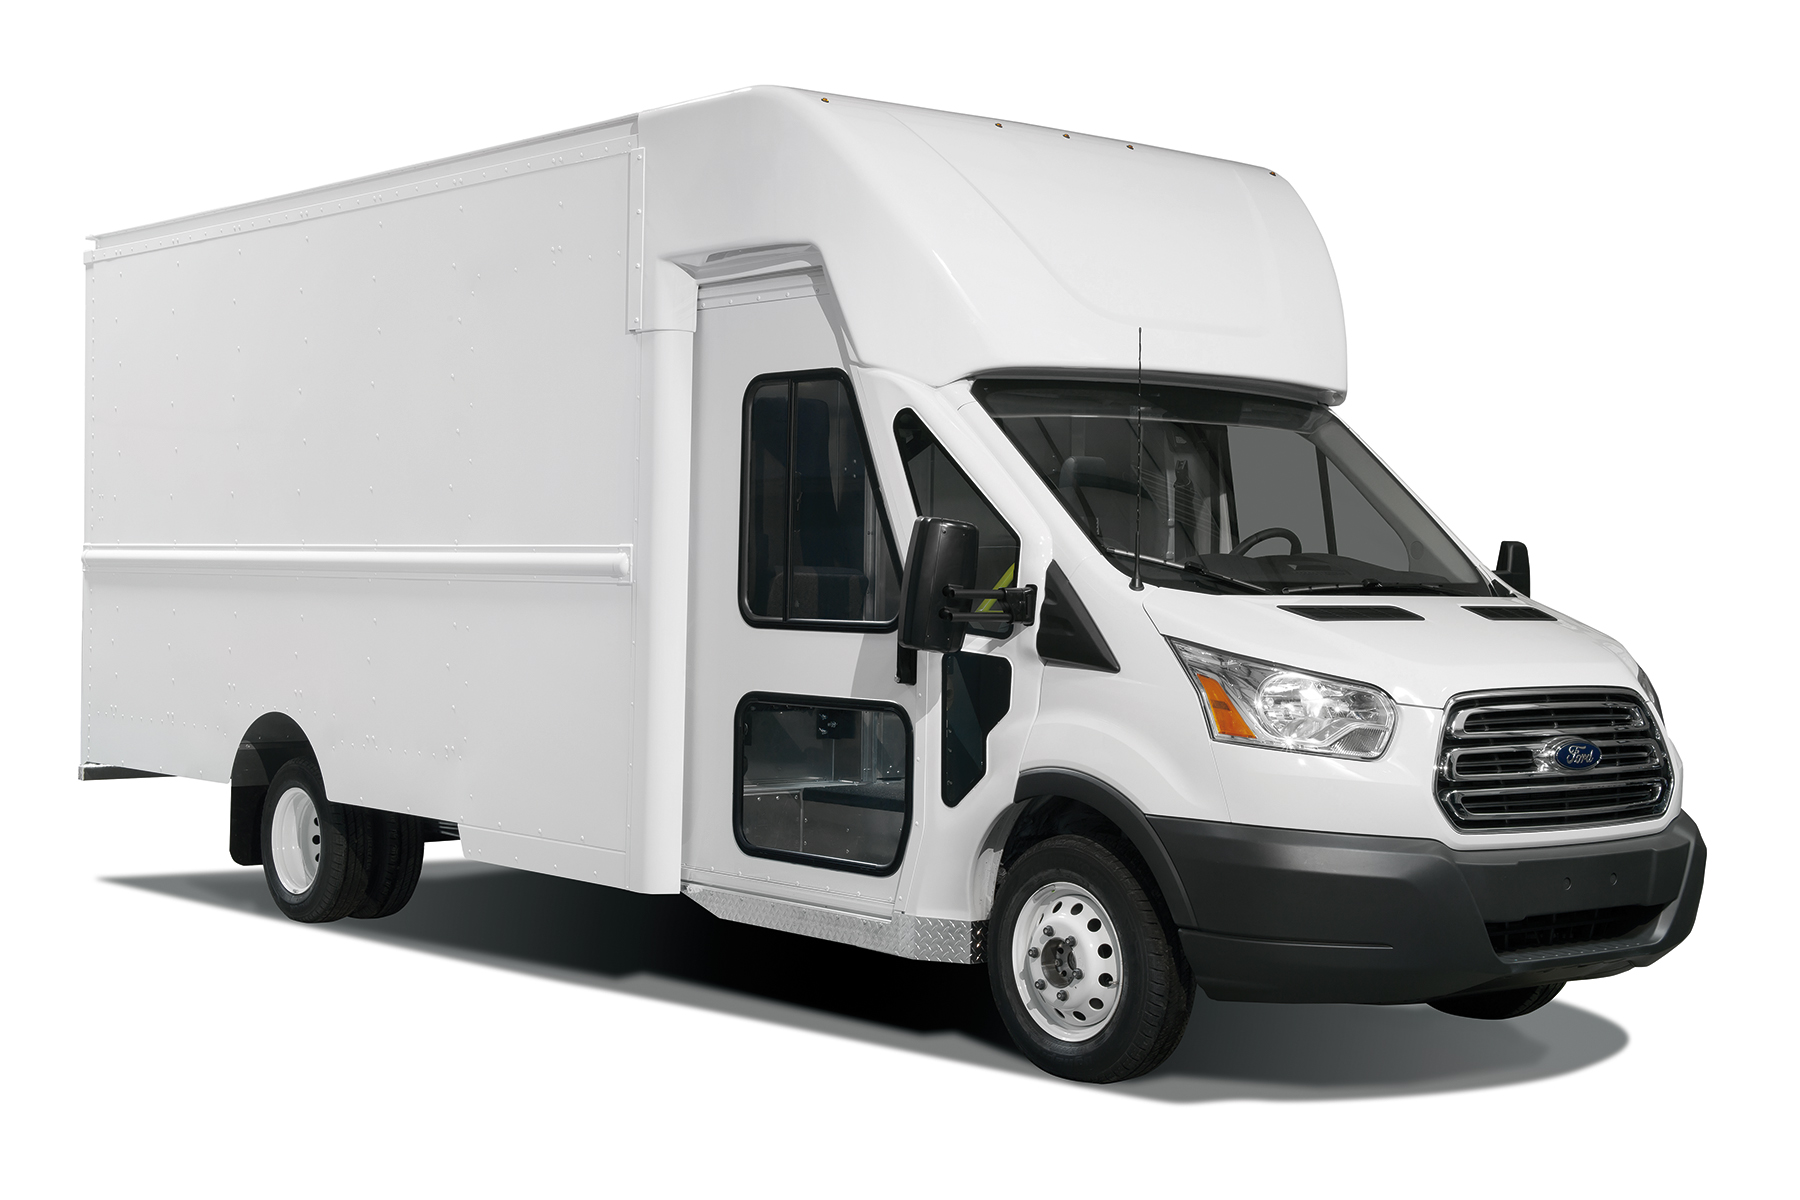 Купить форд транзит будка. Ford Transit v184 фургон. Ford Transit 2018 грузовой фургон. Ford Transit Cargo van. Ford Utilimaster Step van.